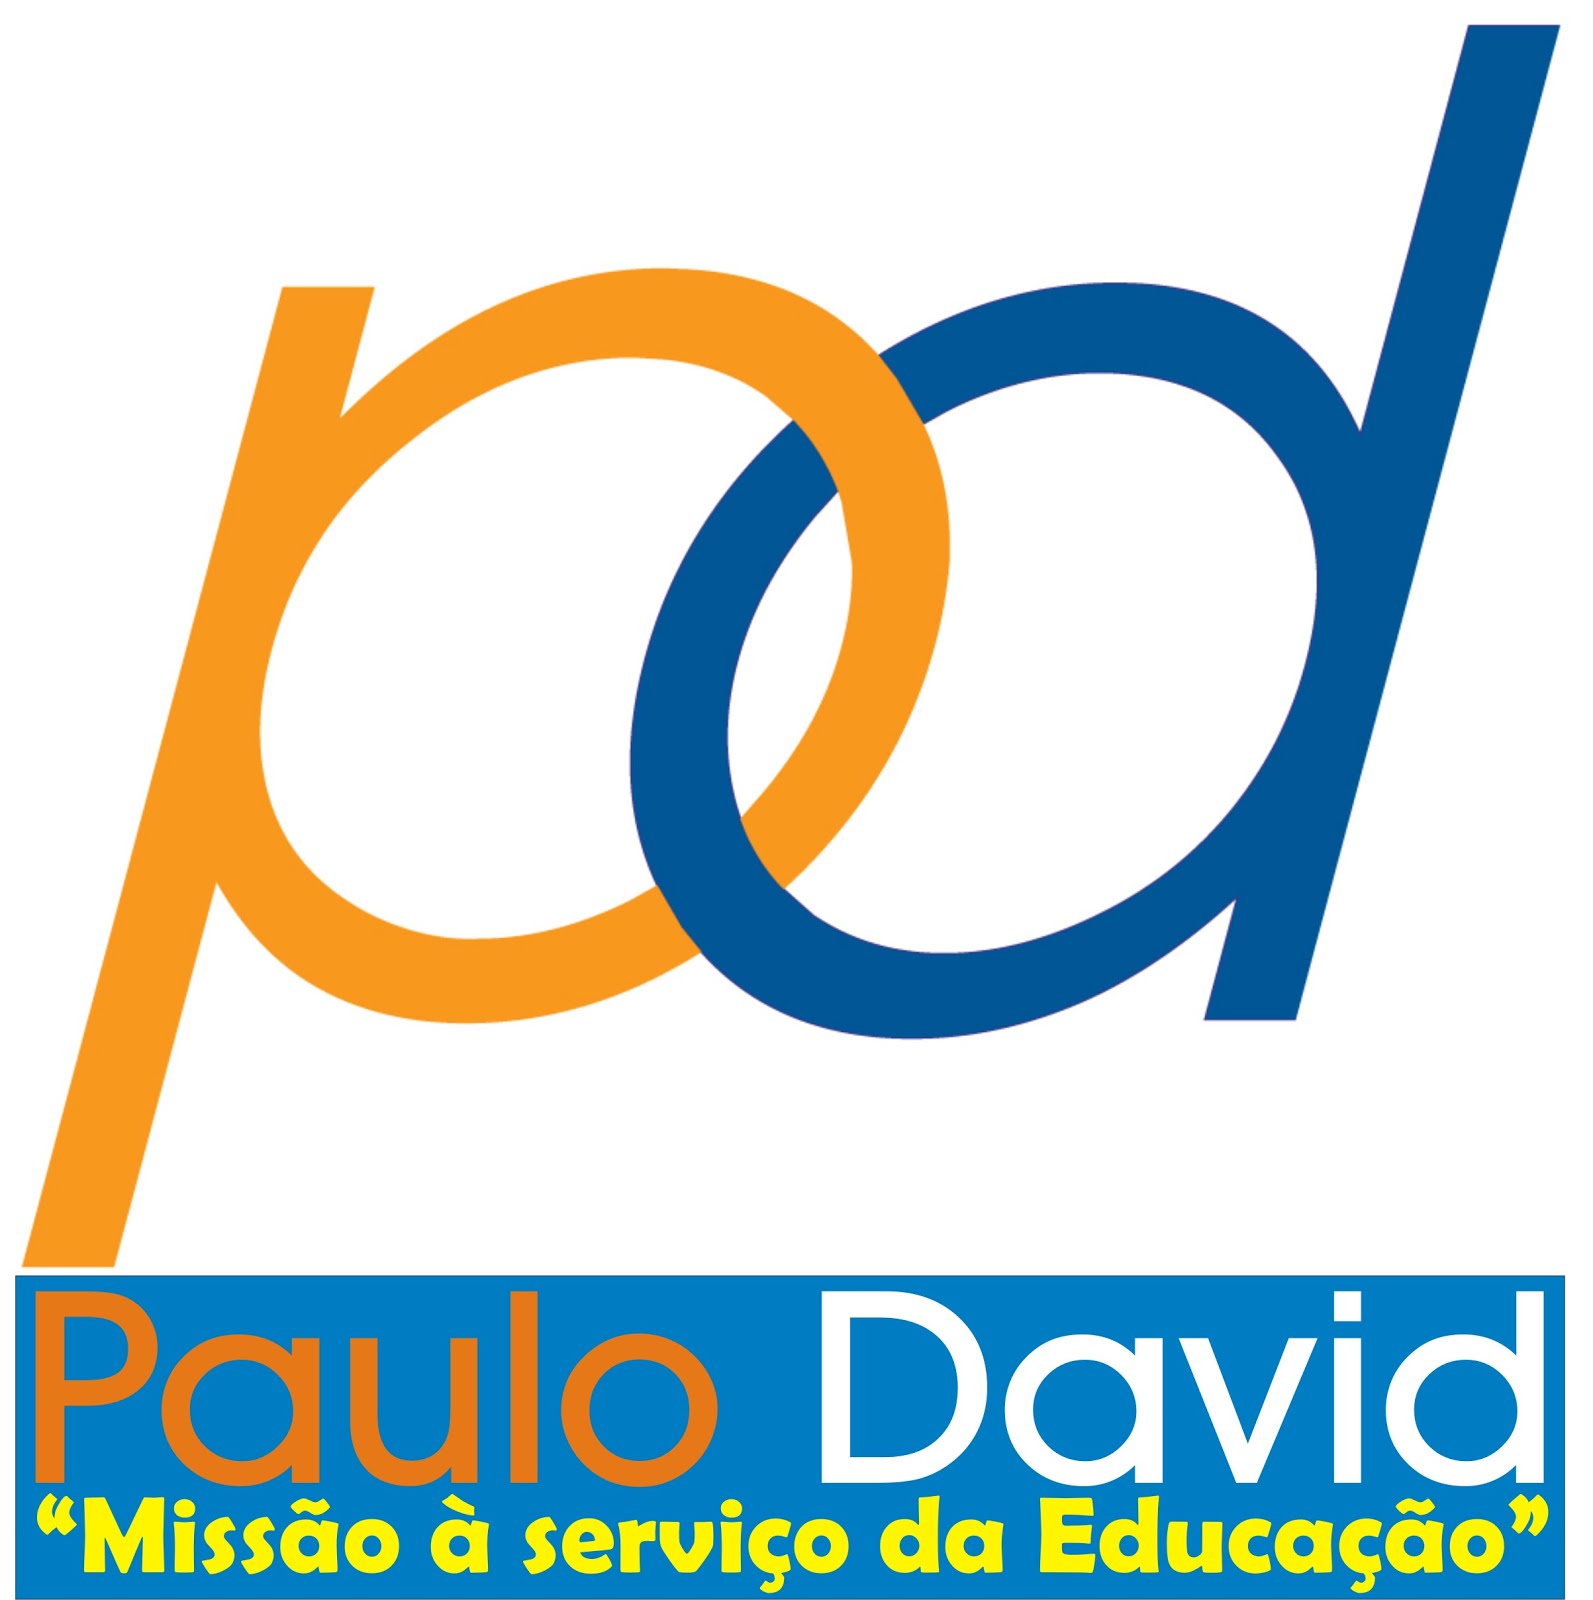 PAULO DAVID